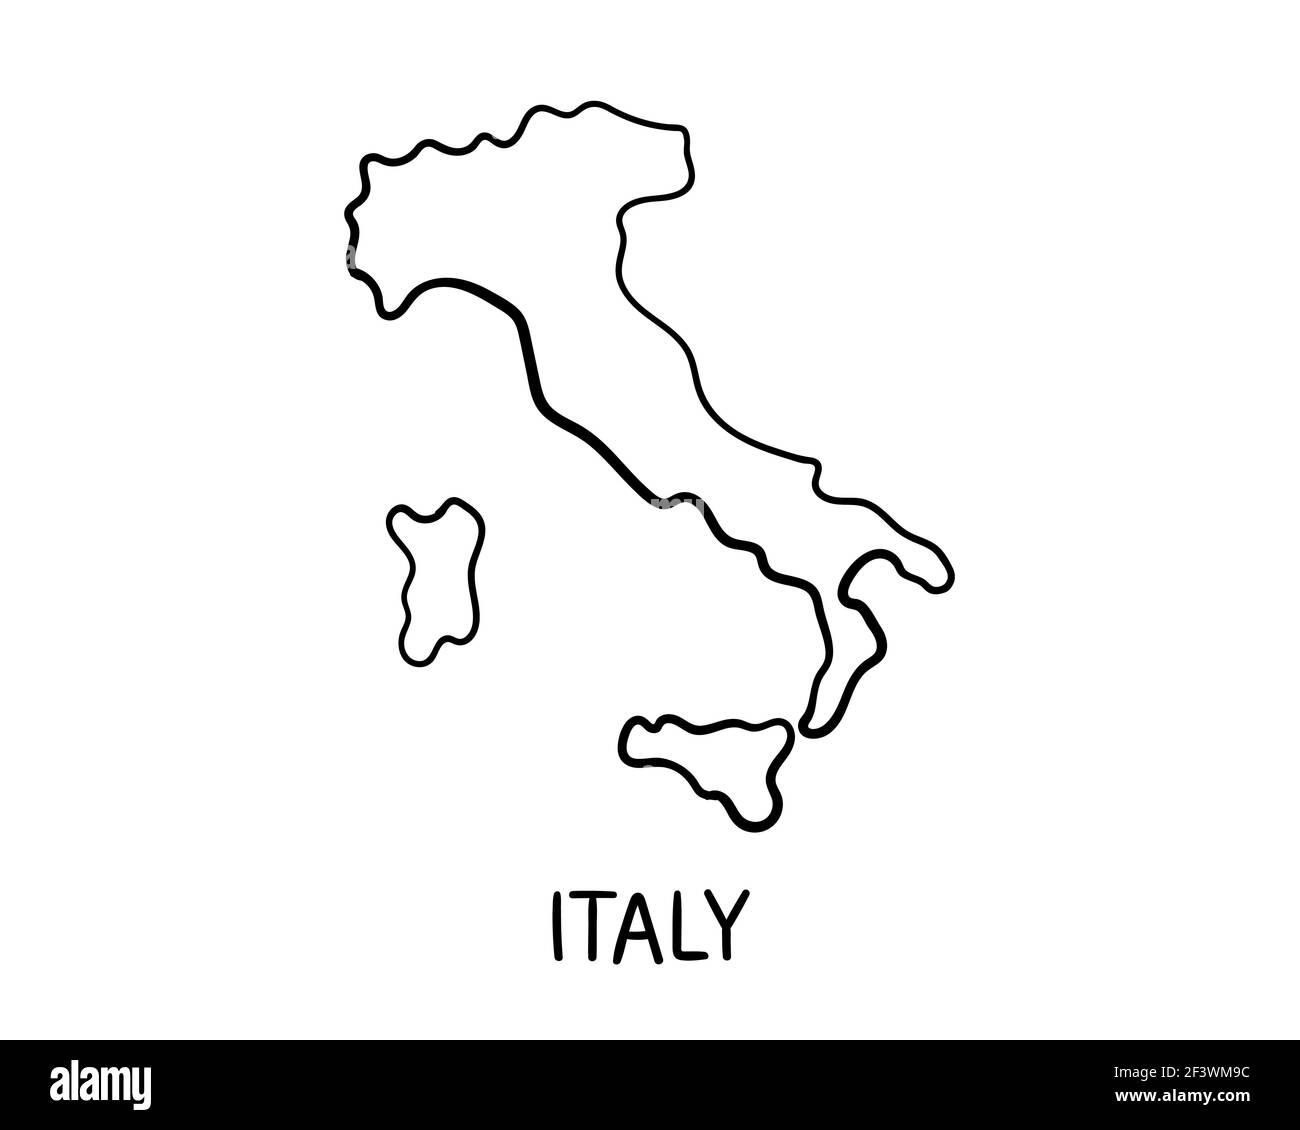 Hand drawn Italy  map illustration Stock Photo